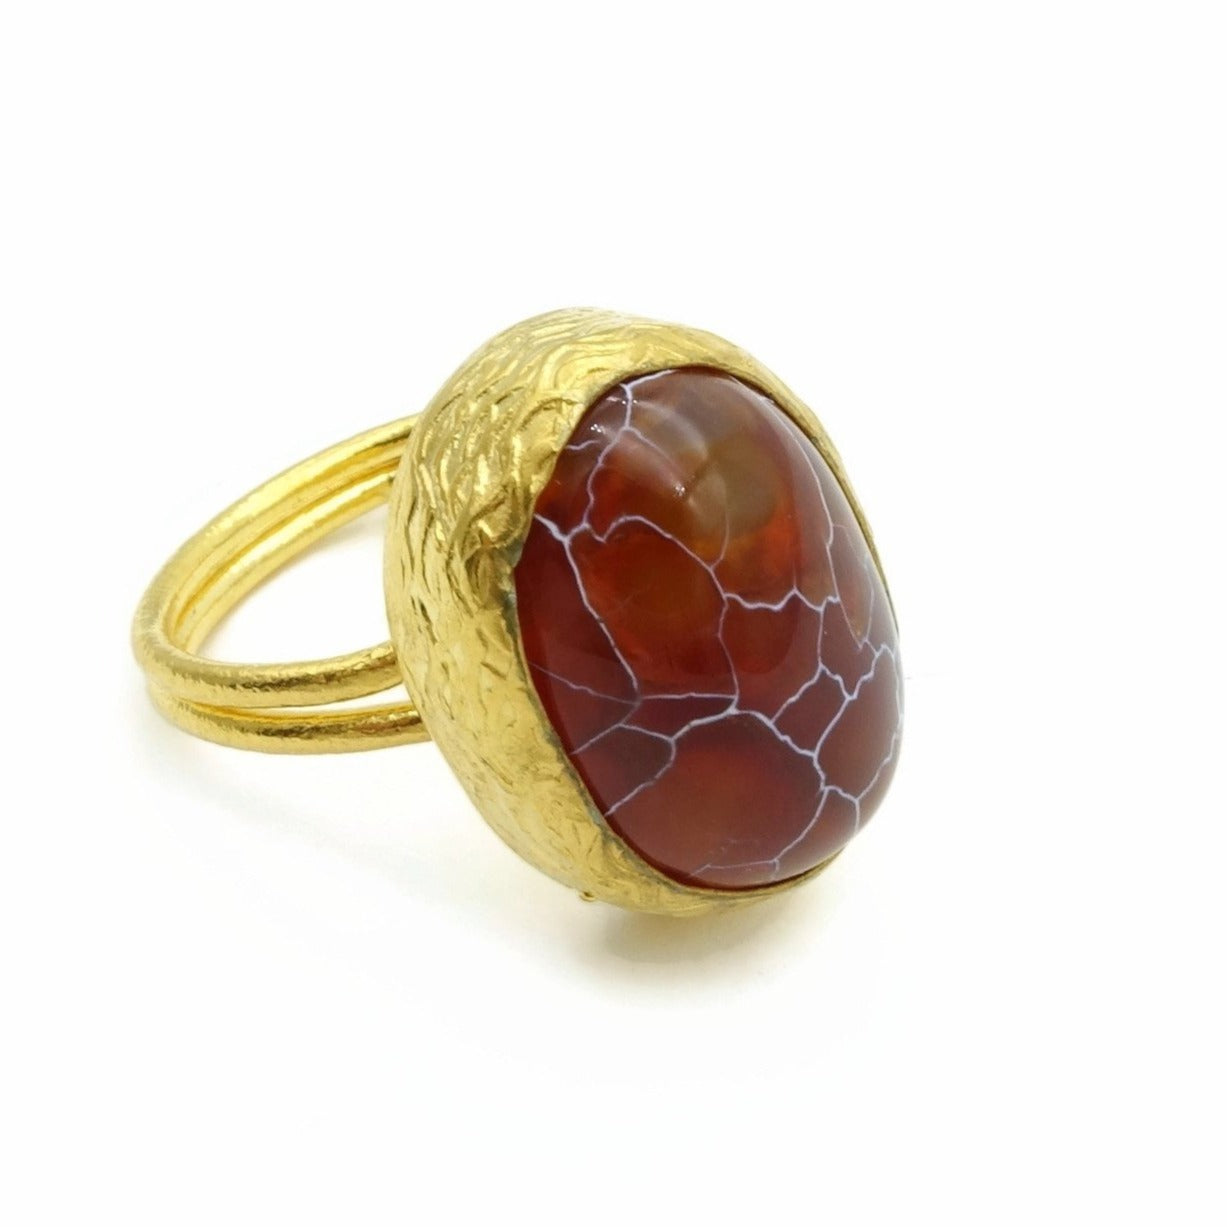 Aylas Agate ring - 21ct Gold plated semi precious gemstone - Handmade in Ottoman Style